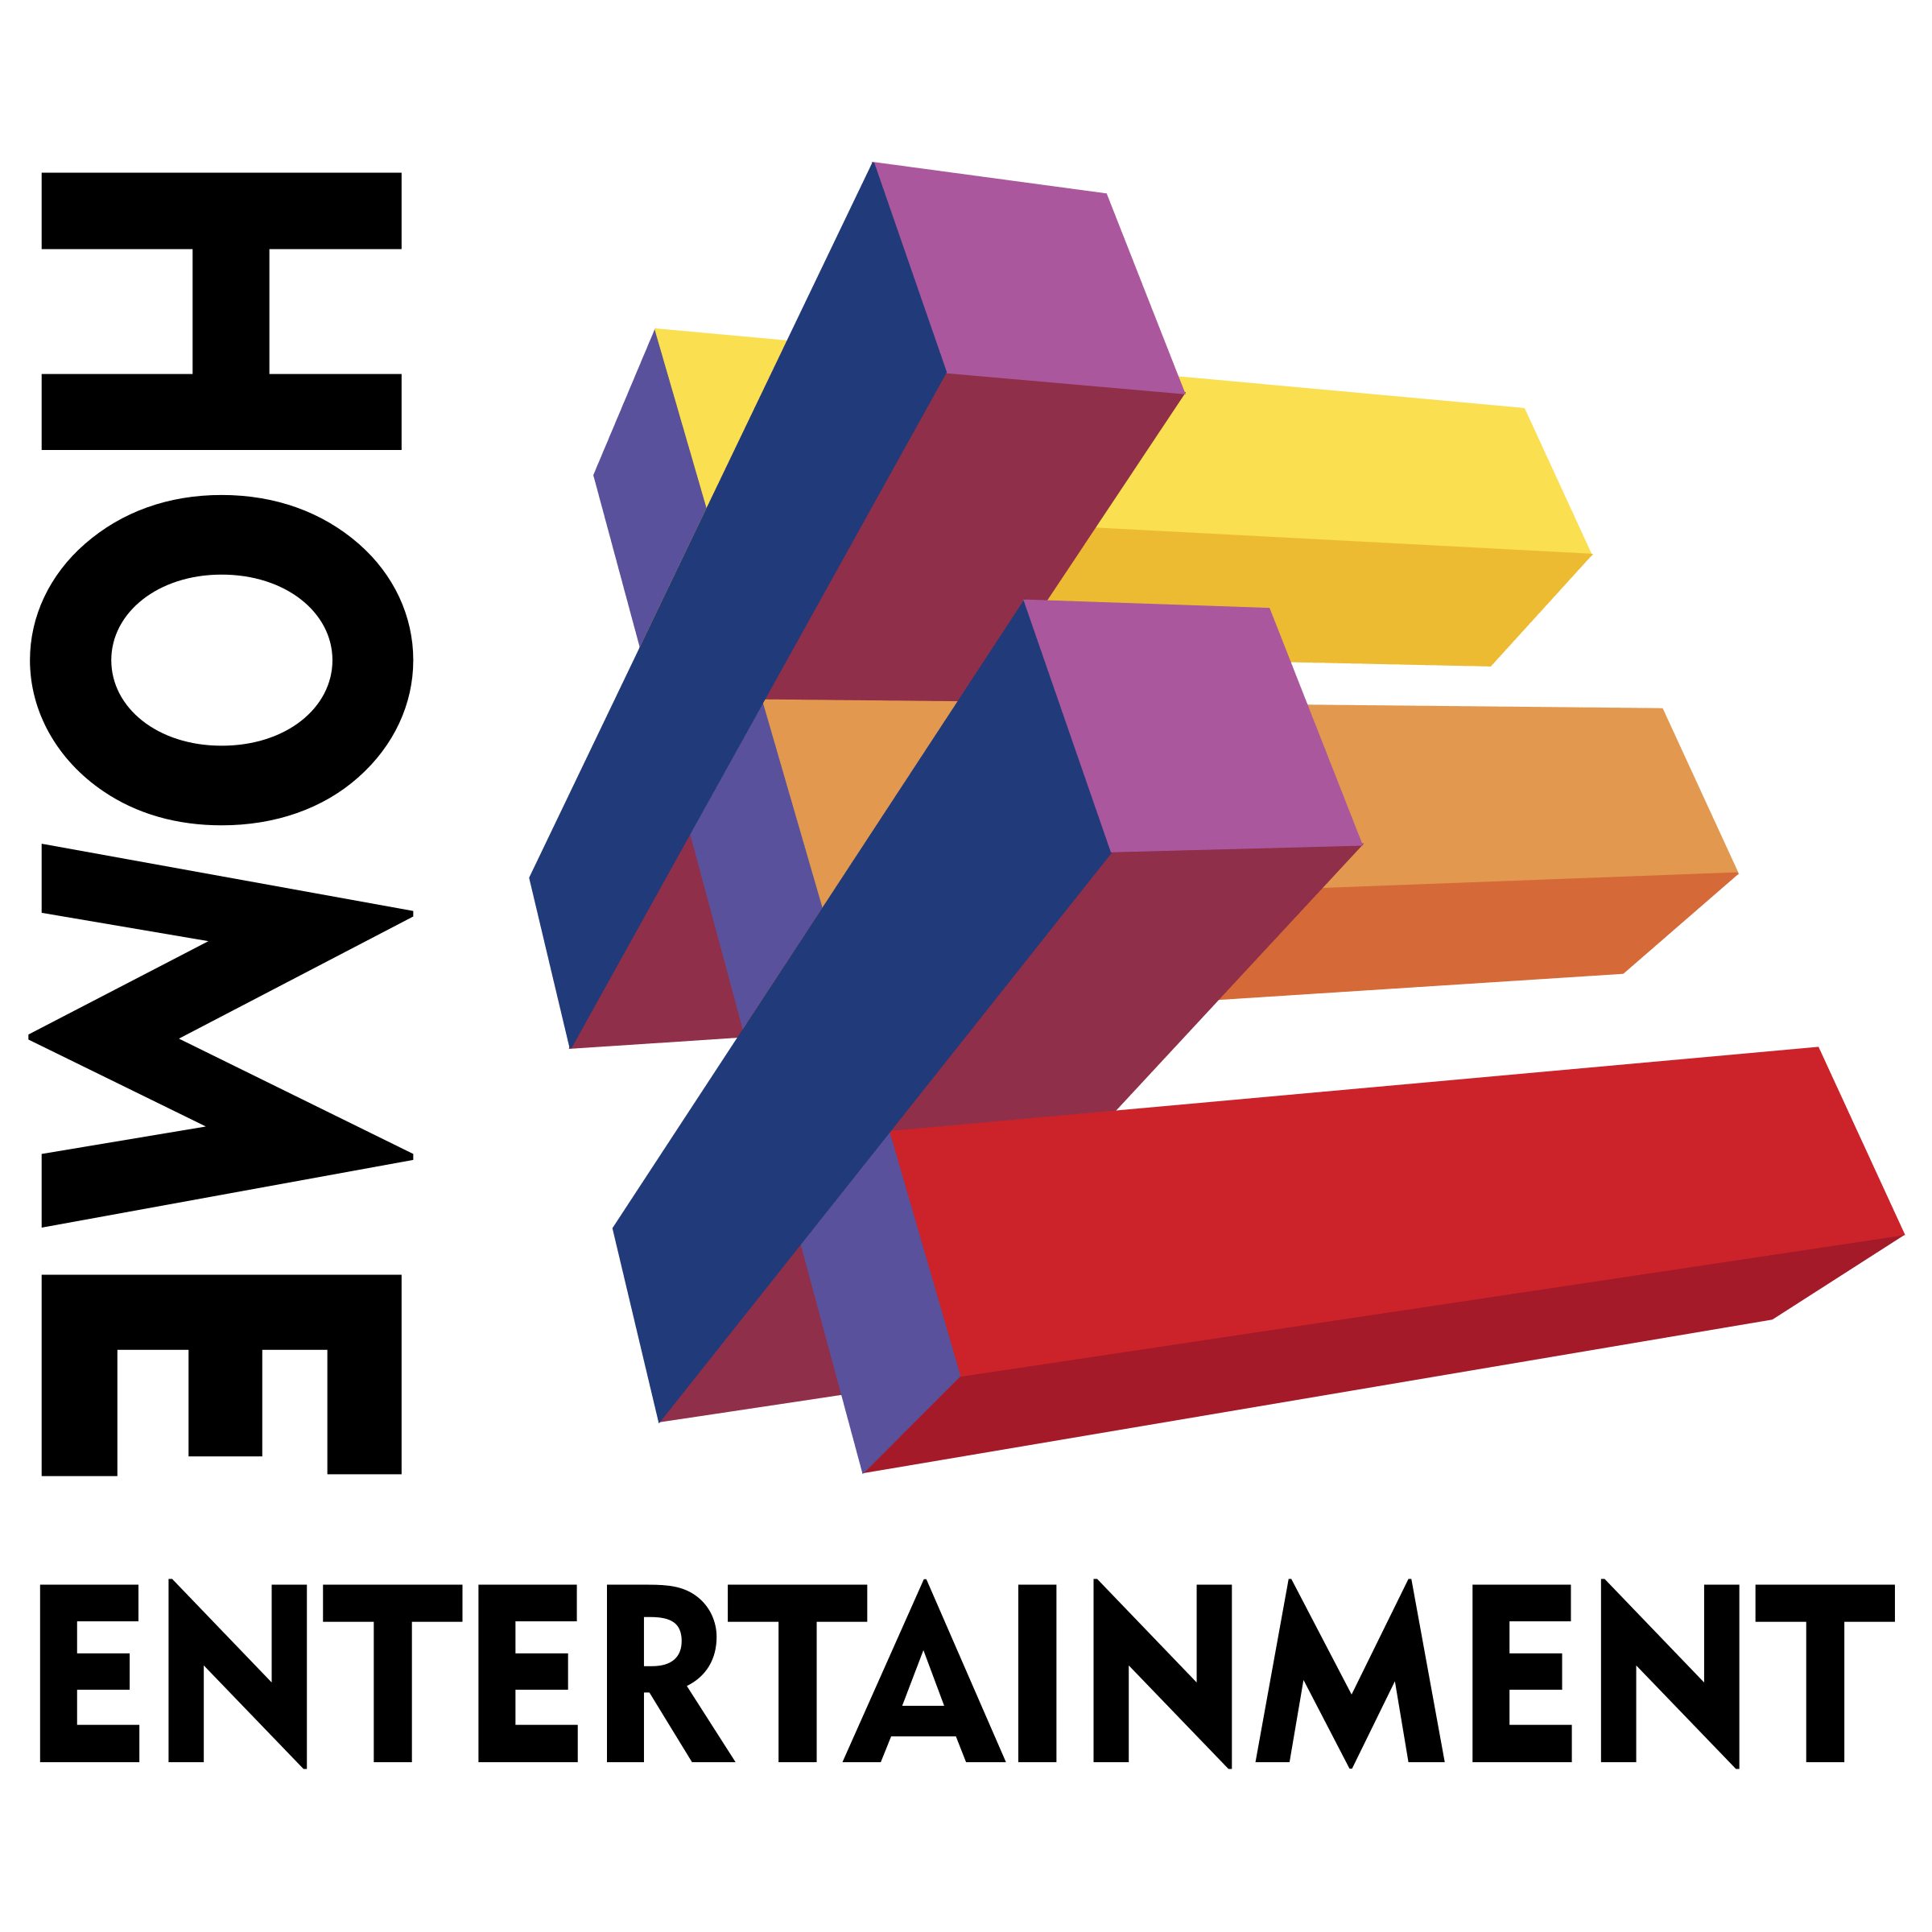 Home Entertainment Logo - Home Entertainment Logo PNG Transparent & SVG Vector - Freebie Supply